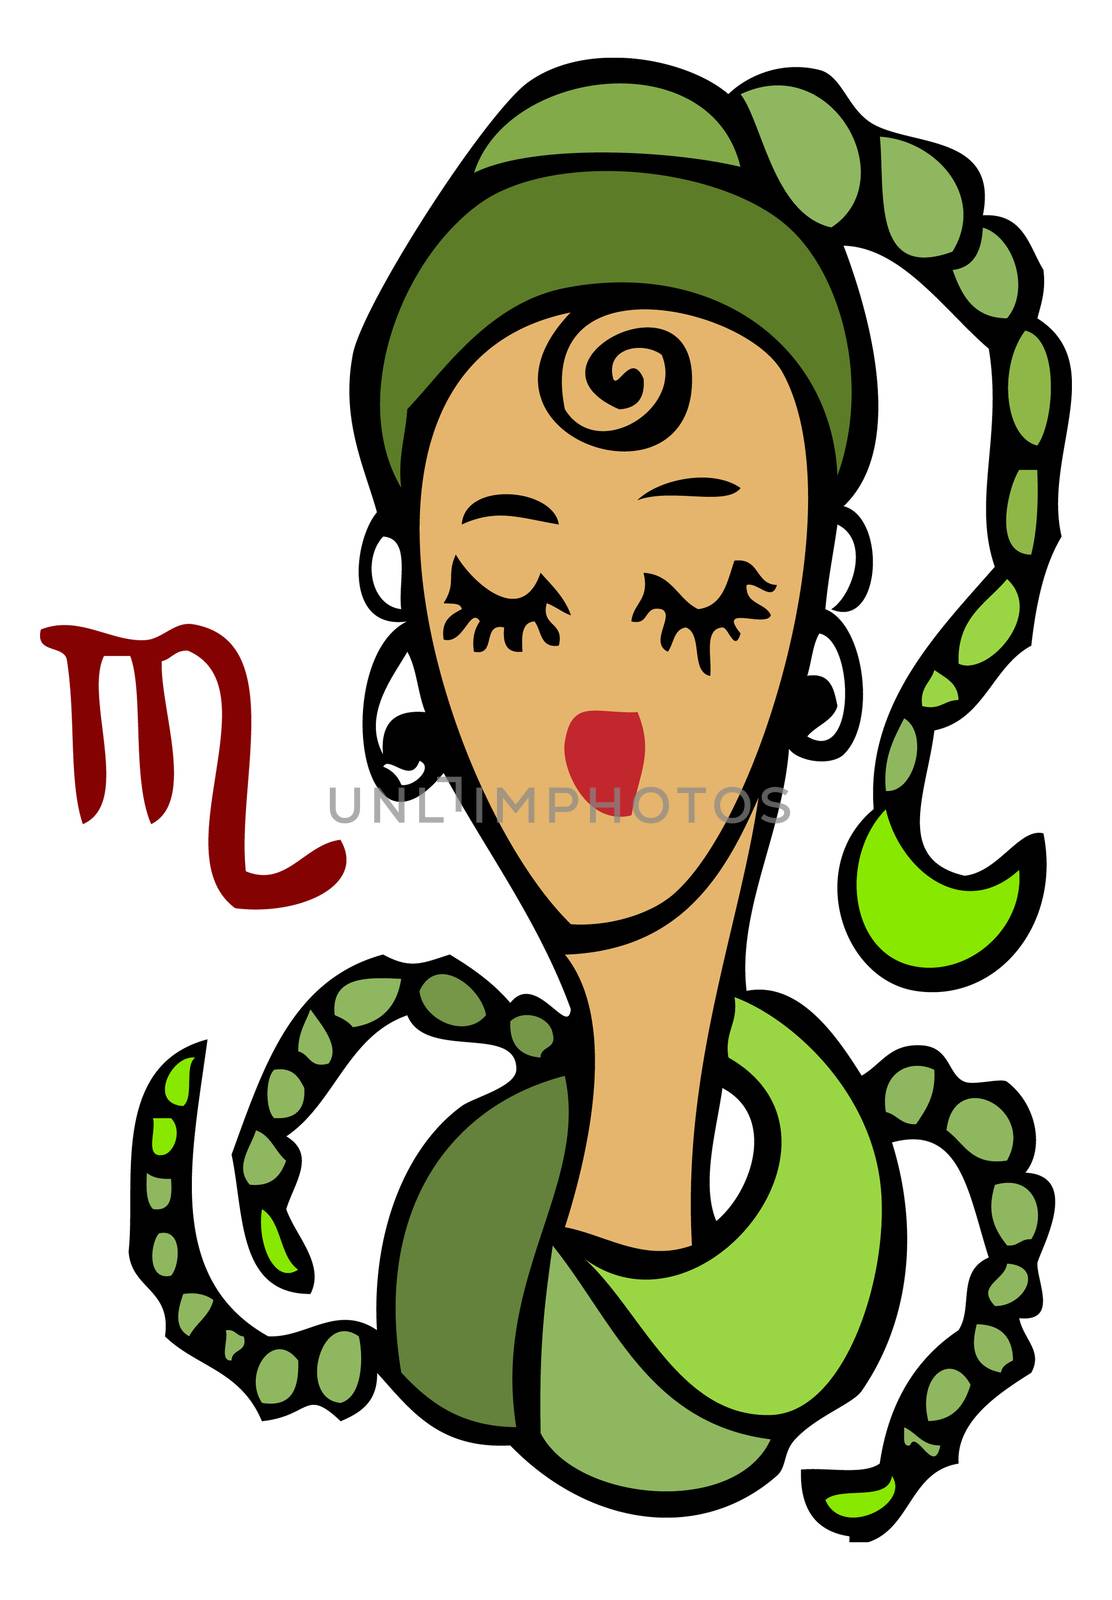 Zodiac signs, icons - scorpio, Beauty Woman girl scorpio symbol by IconsJewelry